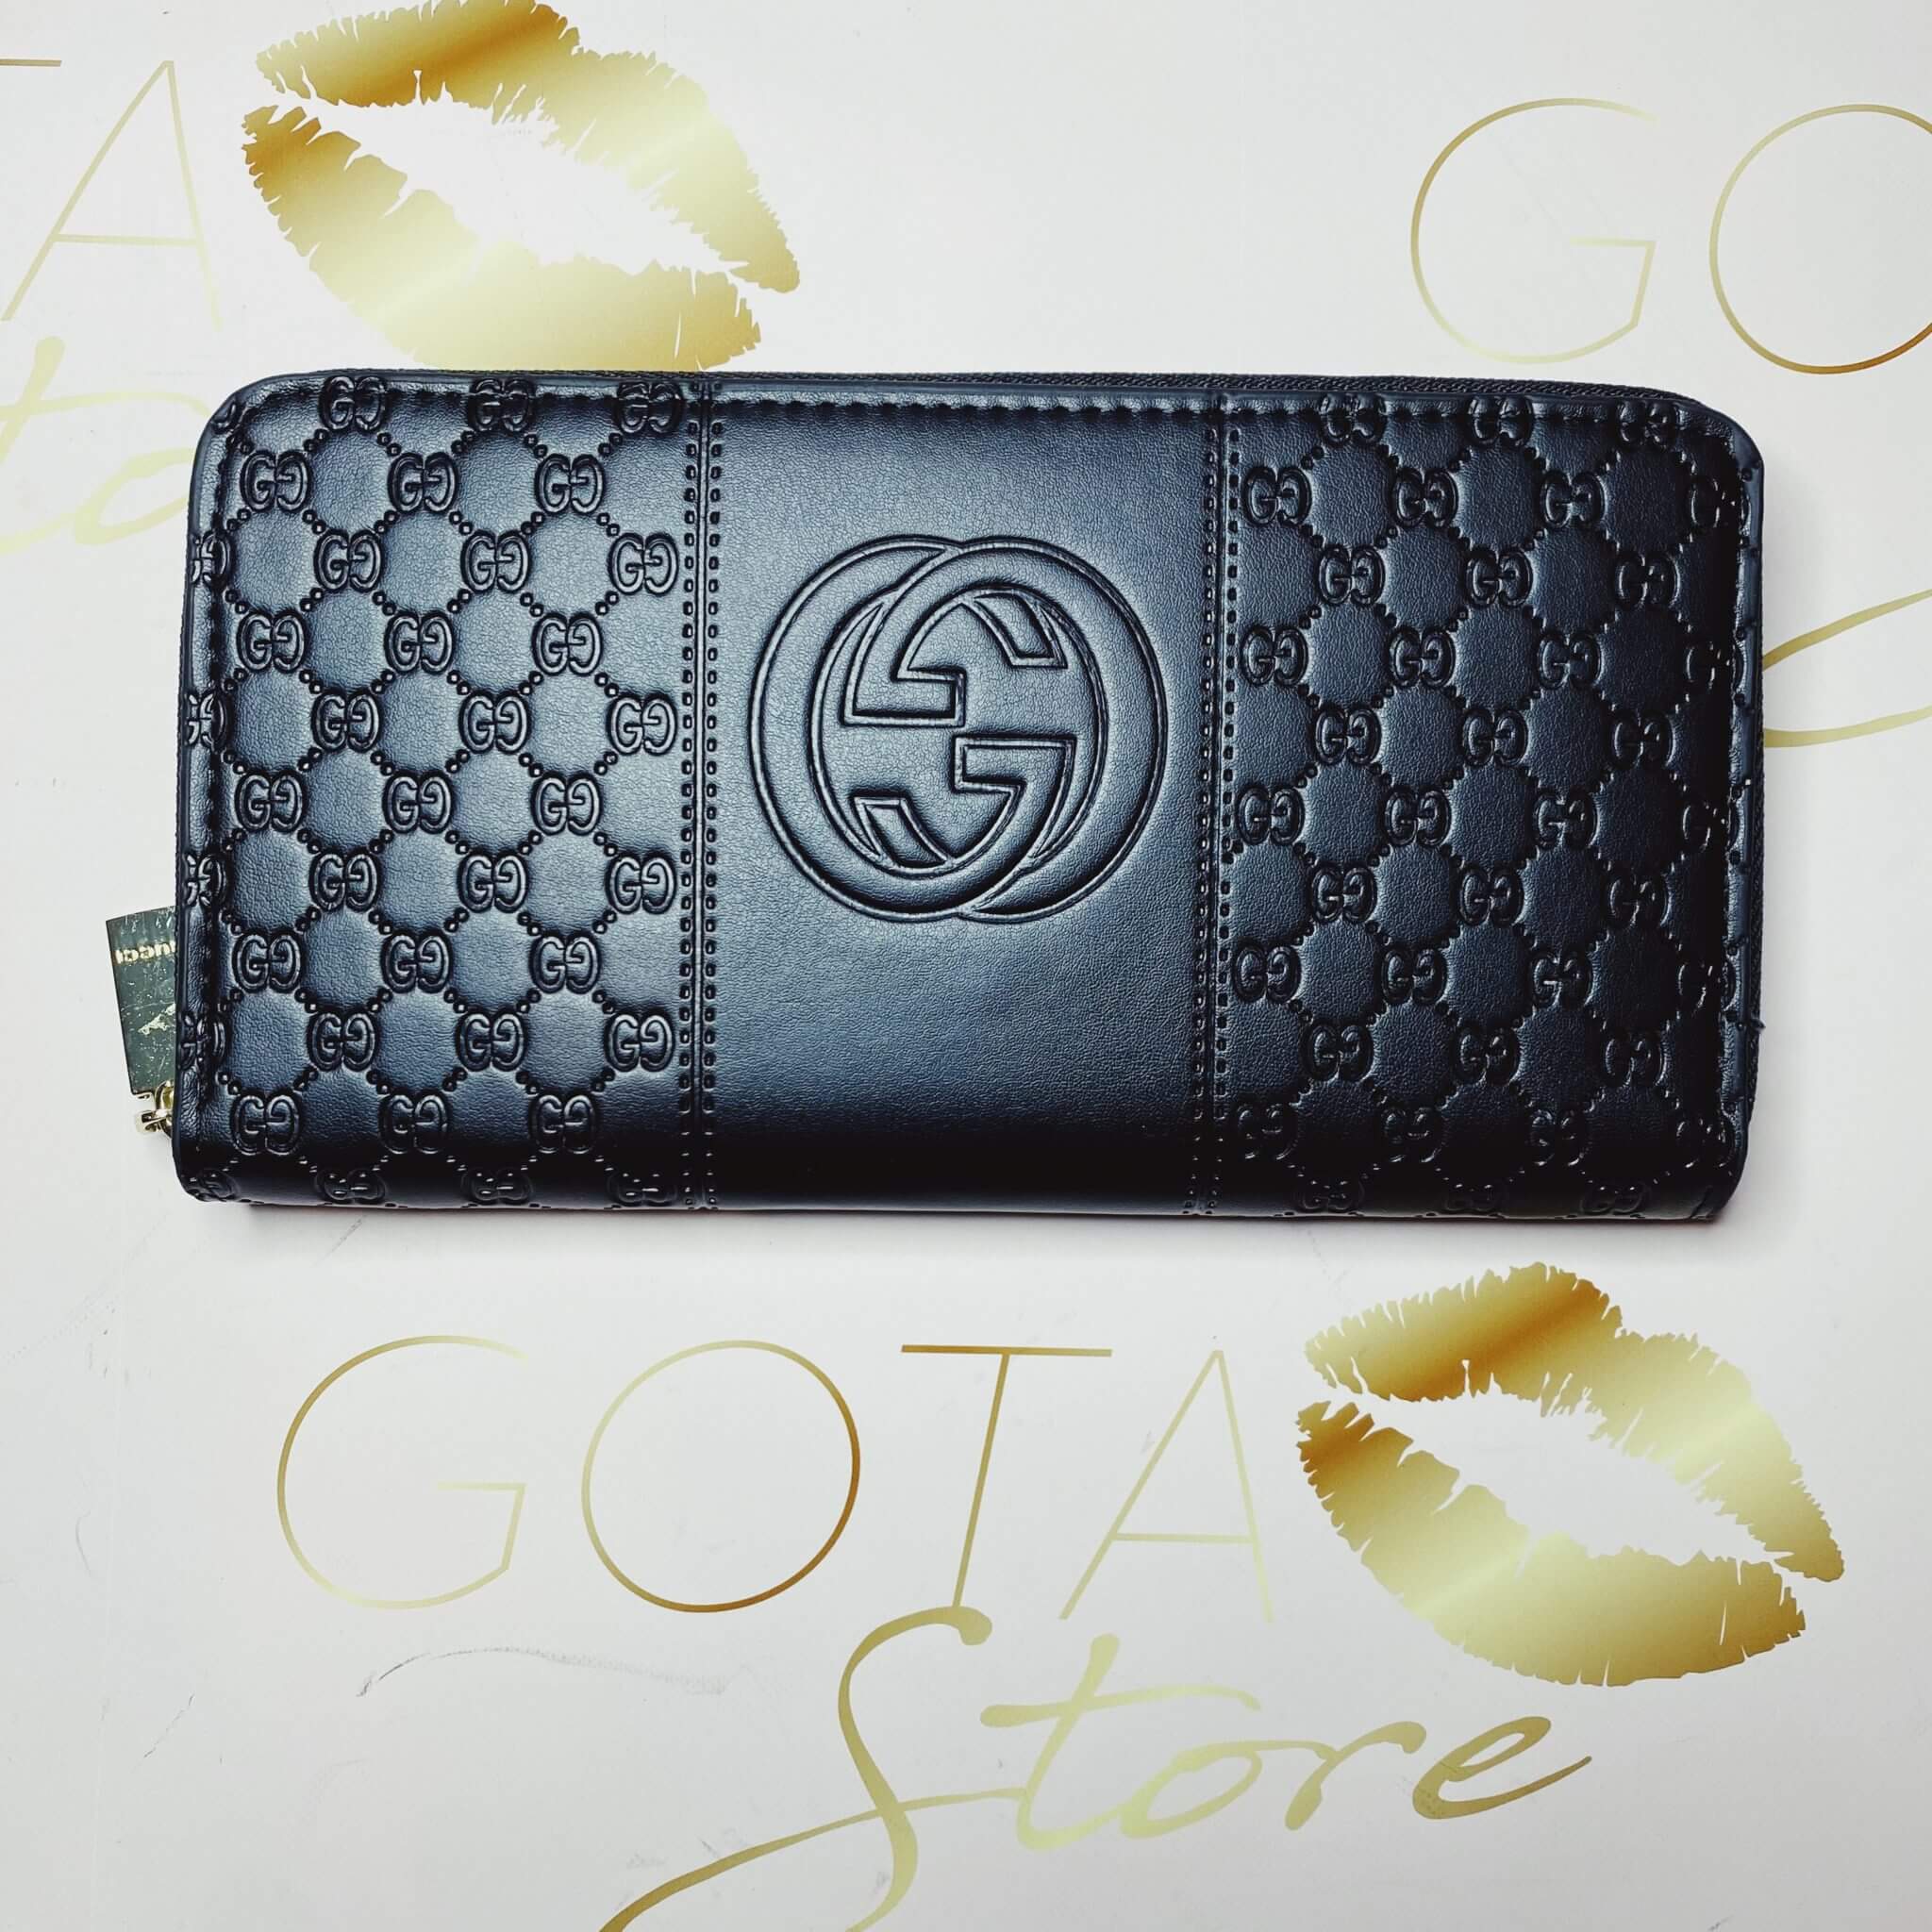 GG Zip Around Classic Women's Wallet - Black Leather & Gold Hardware ...